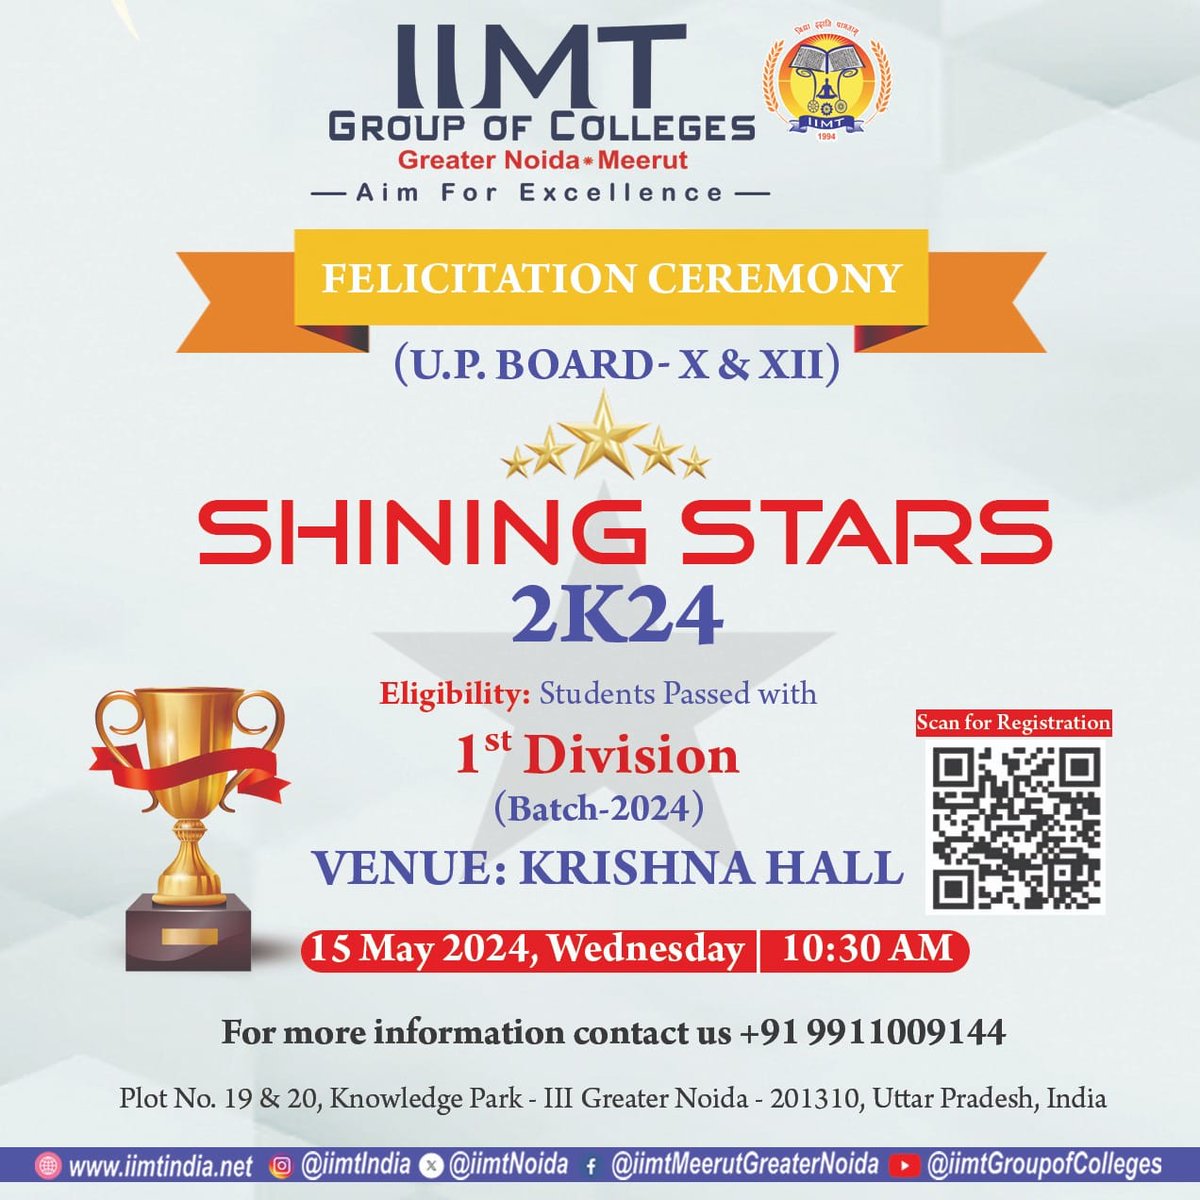 ✨ Shining Stars 2k24 Felicitation Ceremony! . iimtindia.net Call Us: 9520886860 . #IIMTIndia #IIMTNoida #IIMTGreaterNoida #IIMTDelhiNCR #IIMTian #ShiningStars2k24 #FelicitationCeremony #UPBoard #ClassX #ClassXII #Achievement #Success #Inspiration